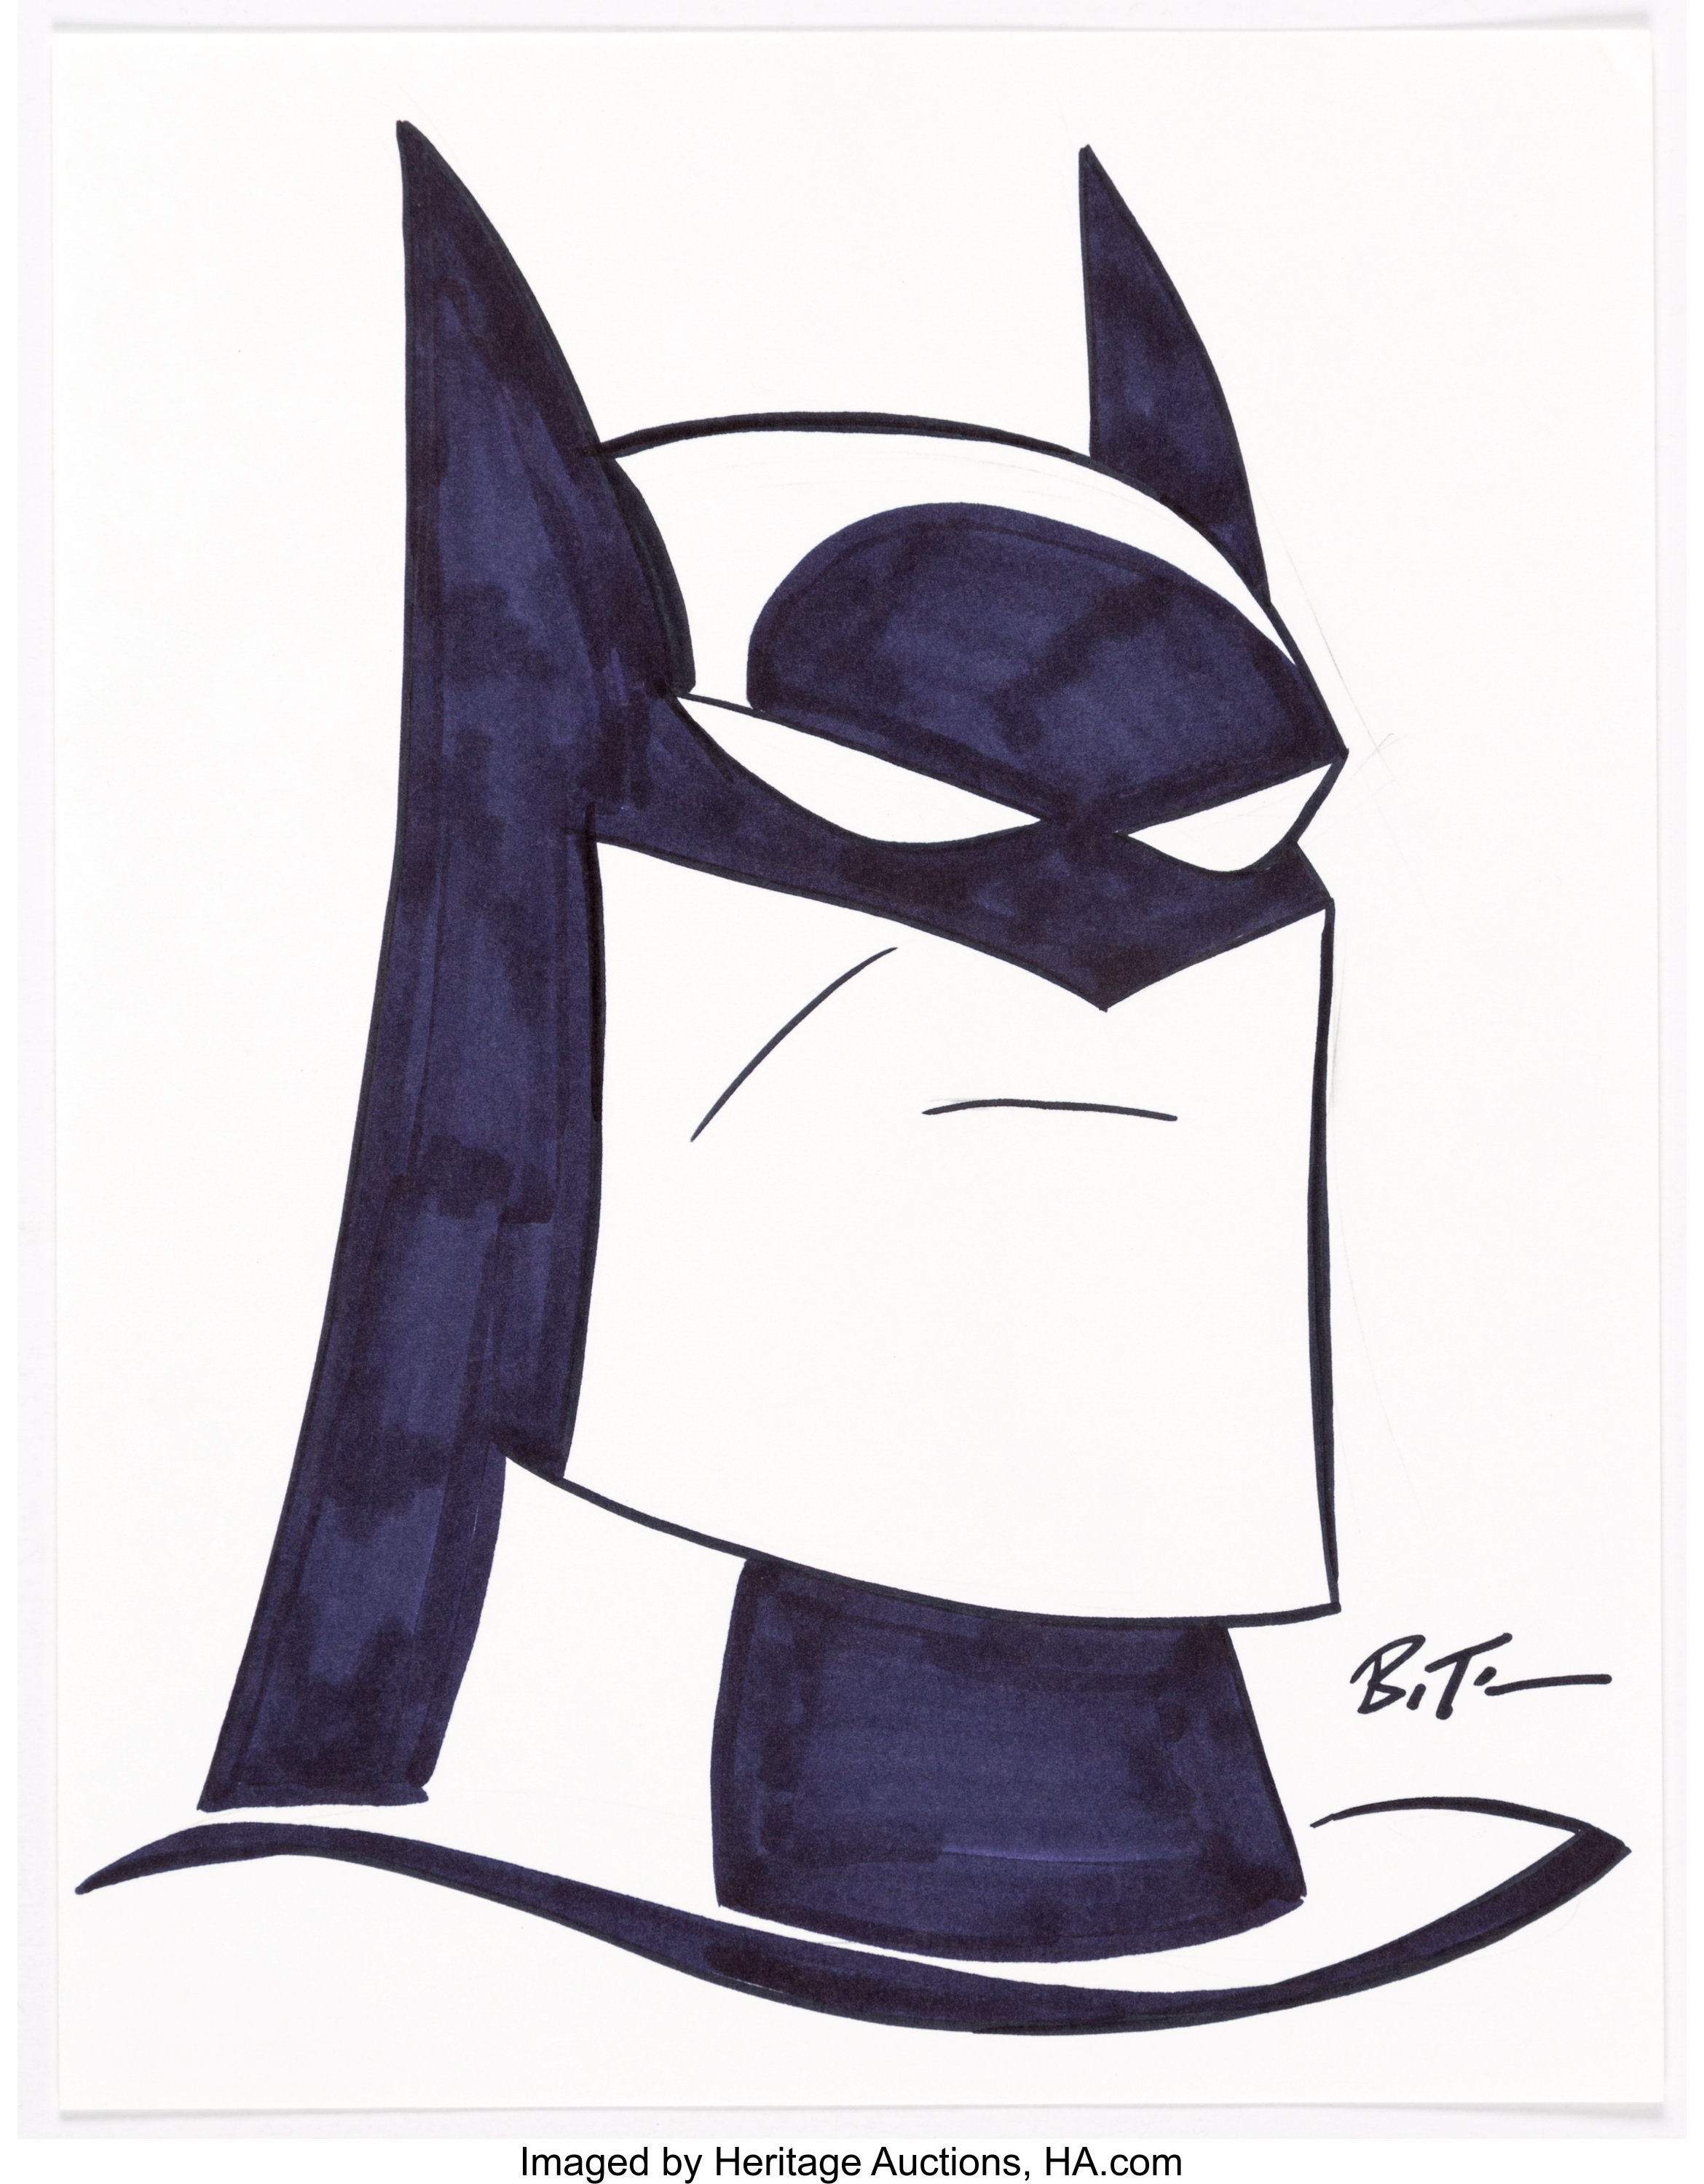 Bruce Timm - Batman Specialty Illustration Original Art | Lot #17155 |  Heritage Auctions